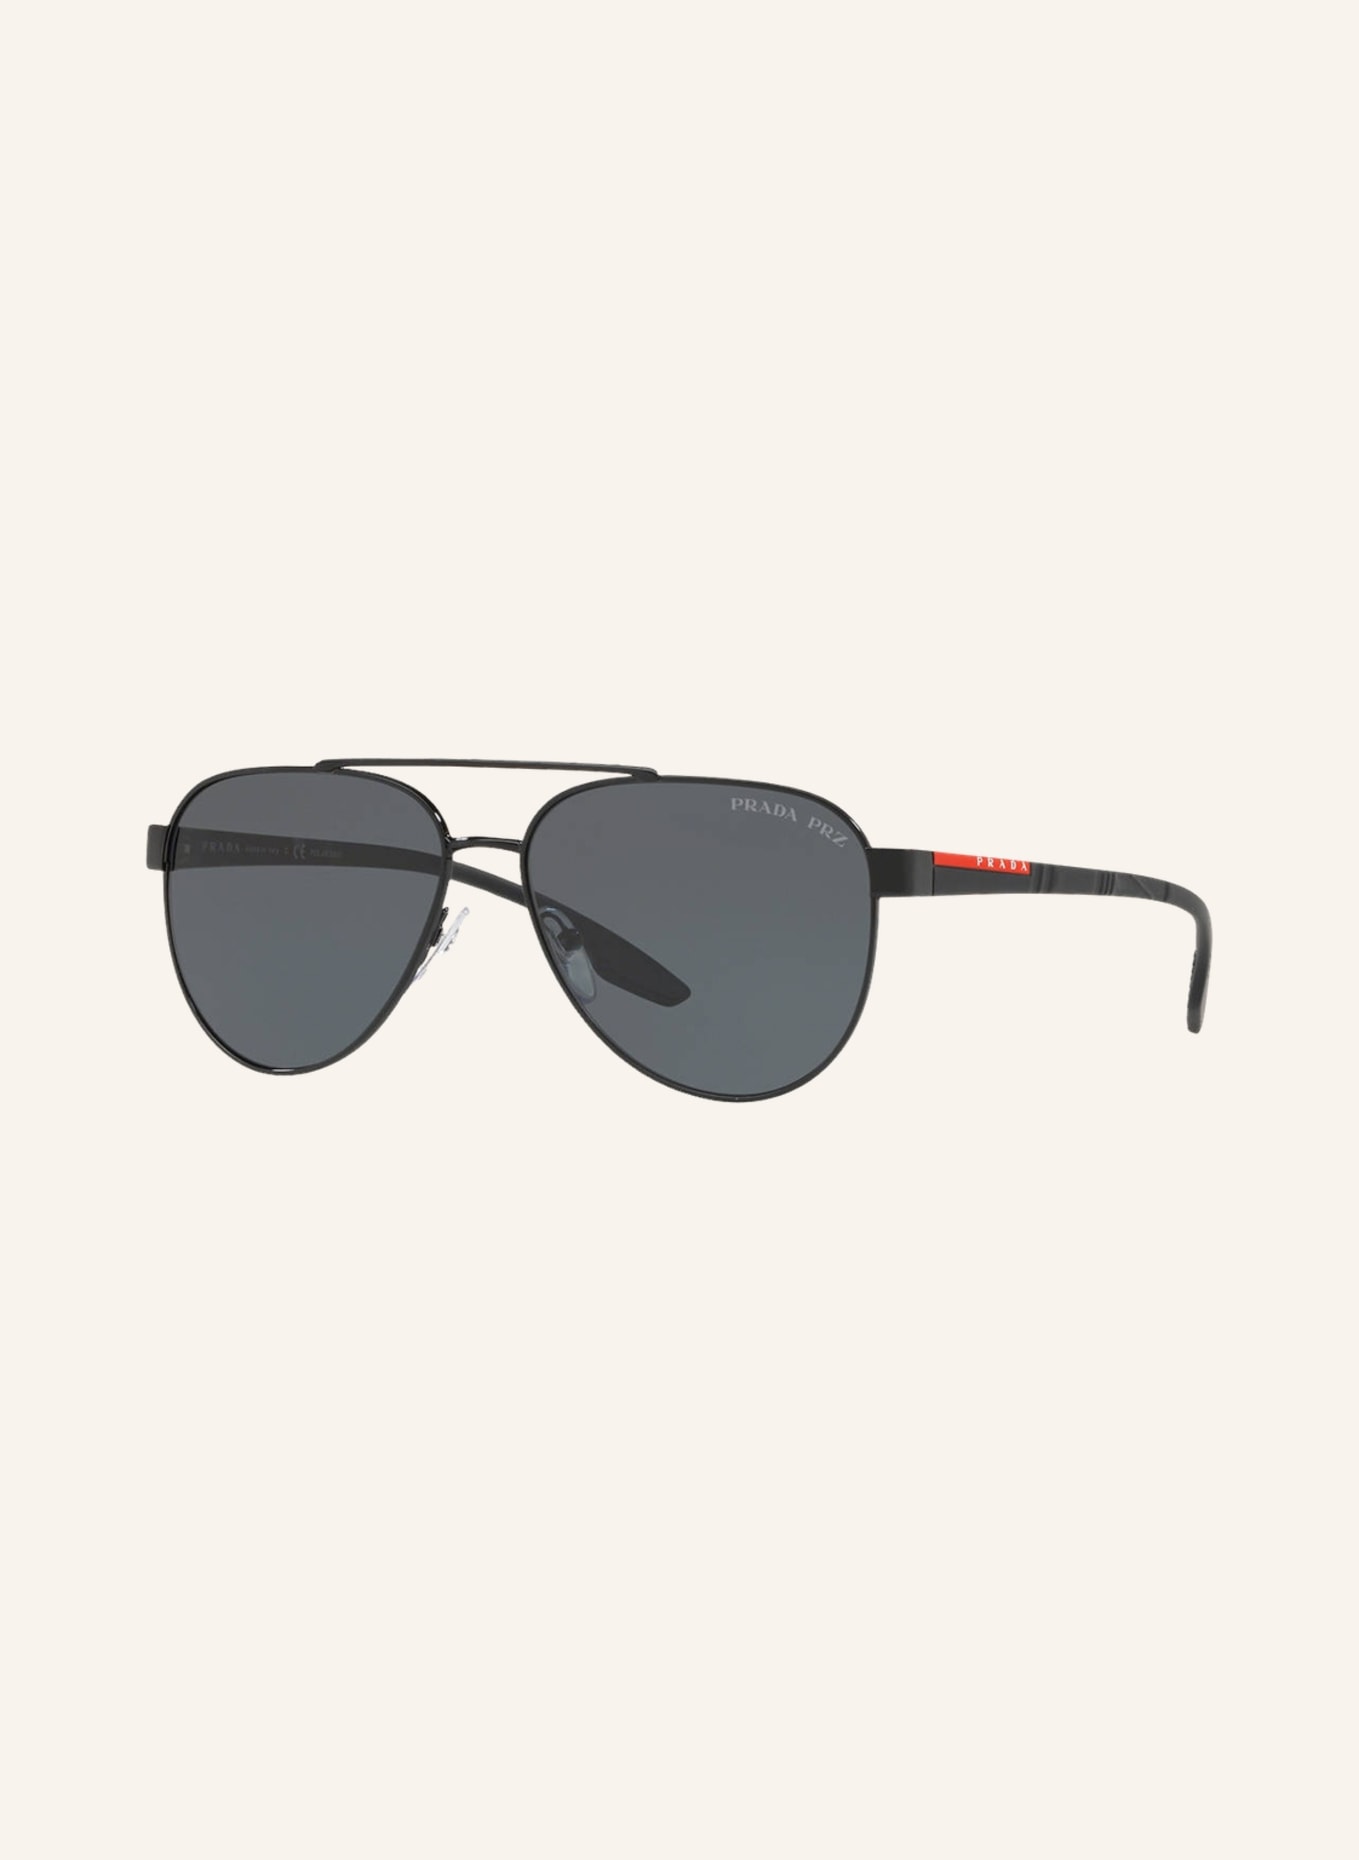 PRADA LINEA ROSSA Sunglasses PS 54TS in 1ab5z1 - black/ gray polarized |  Breuninger